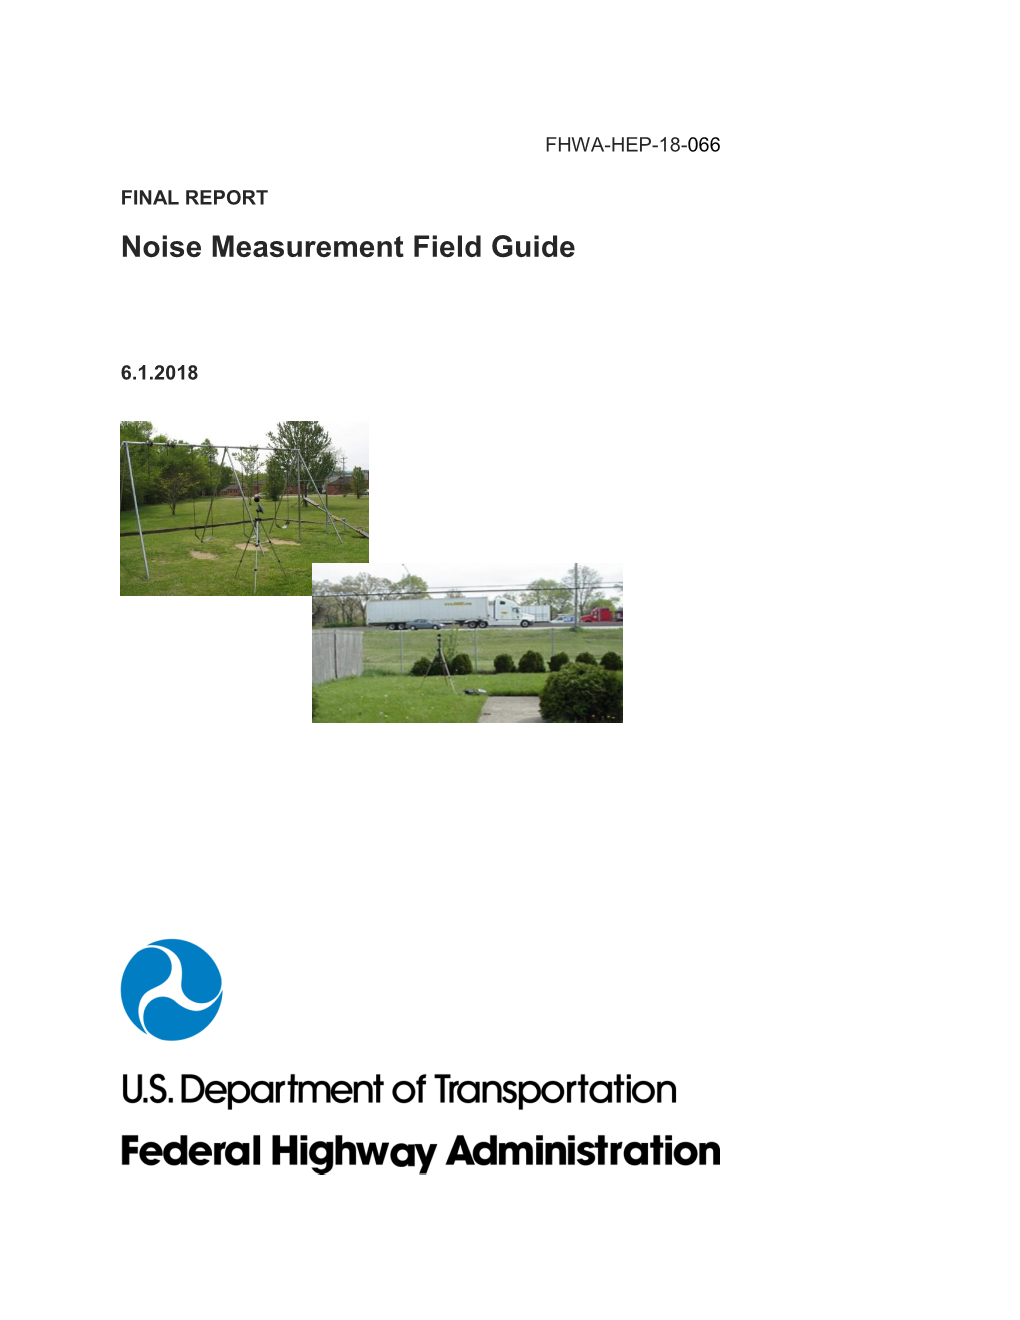 Noise Measurement Field Guide Final Report